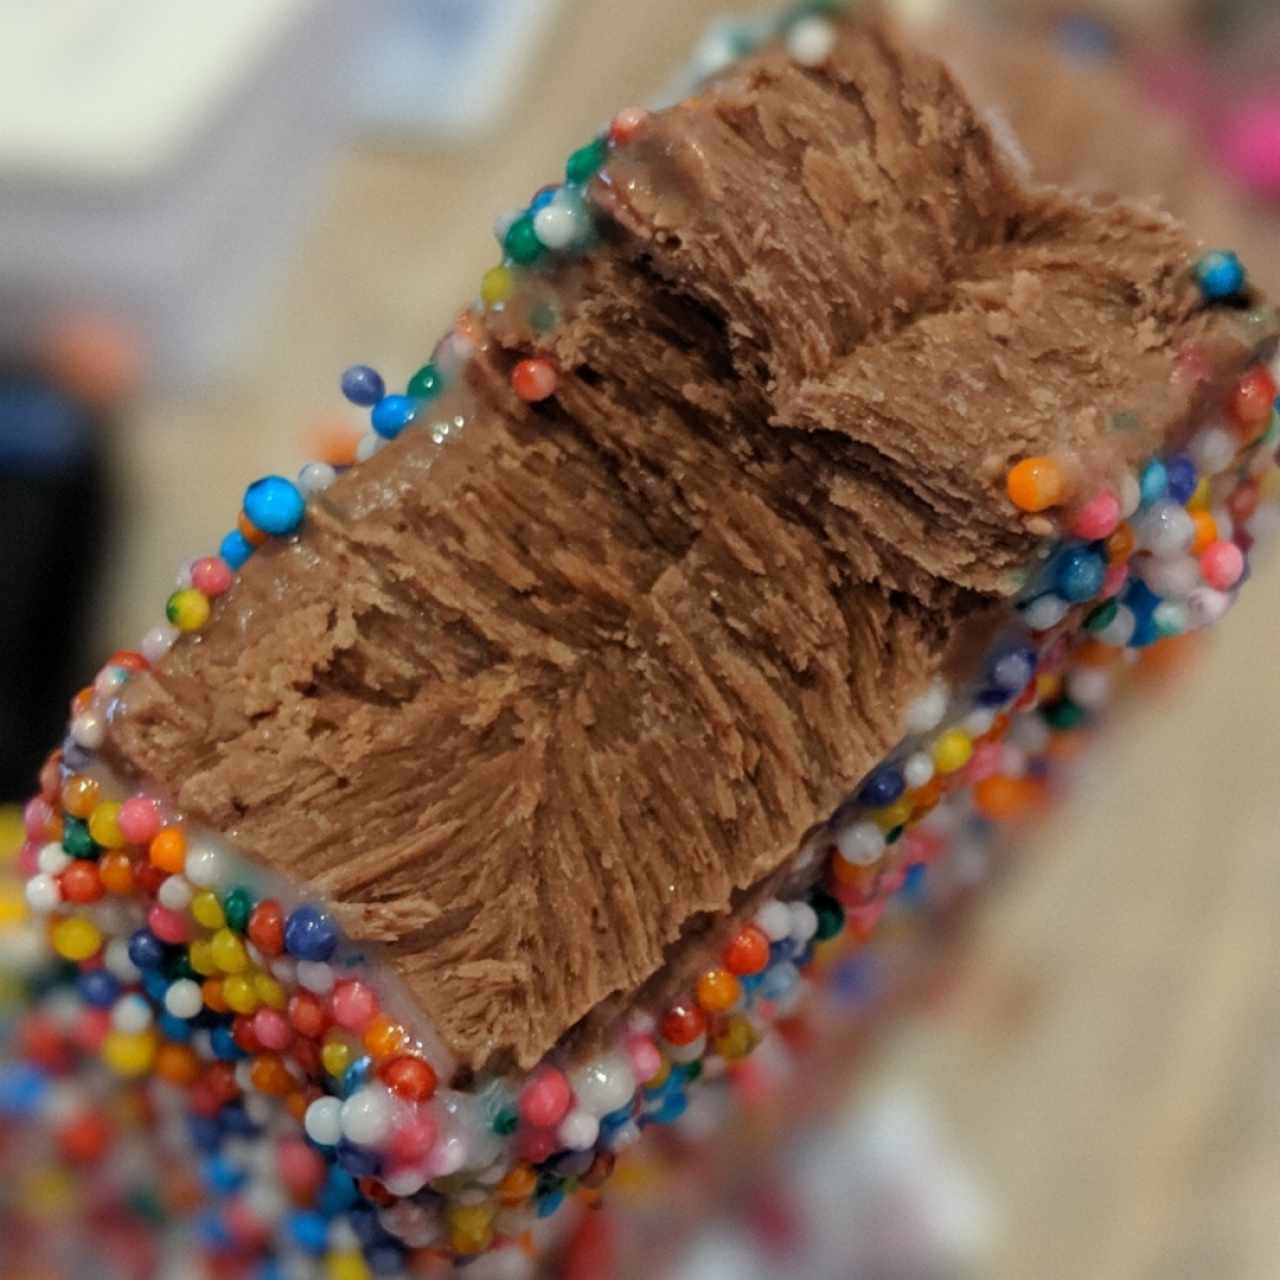 Paleta de chocolate cubierta de chispas de colores